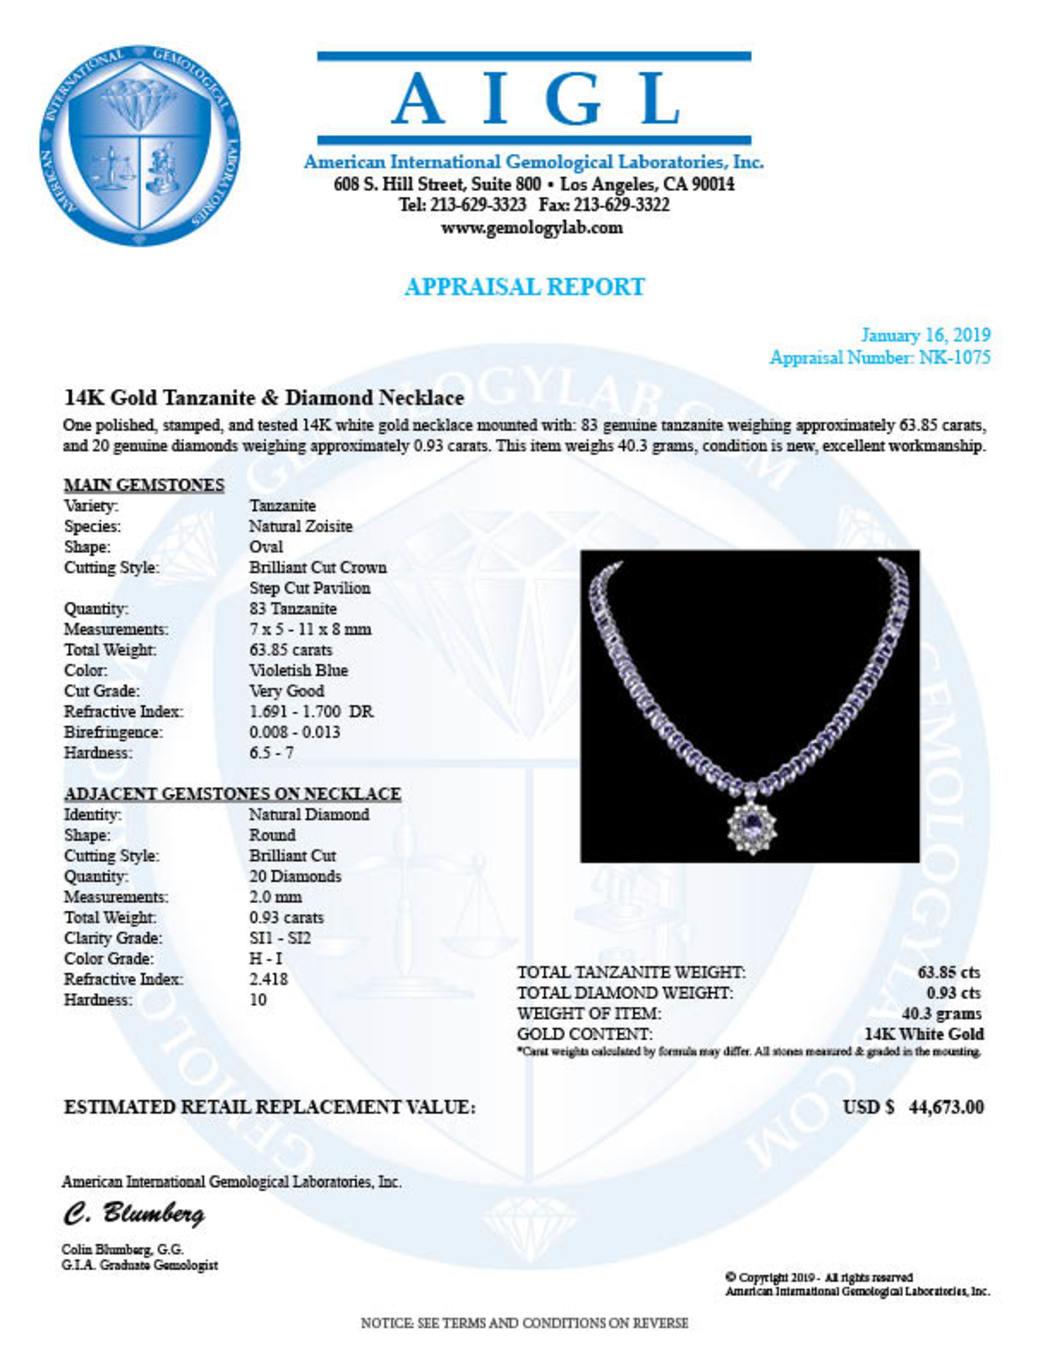 14K White Gold 63.85ct Tanzanite and 0.93ct Diamond Necklace